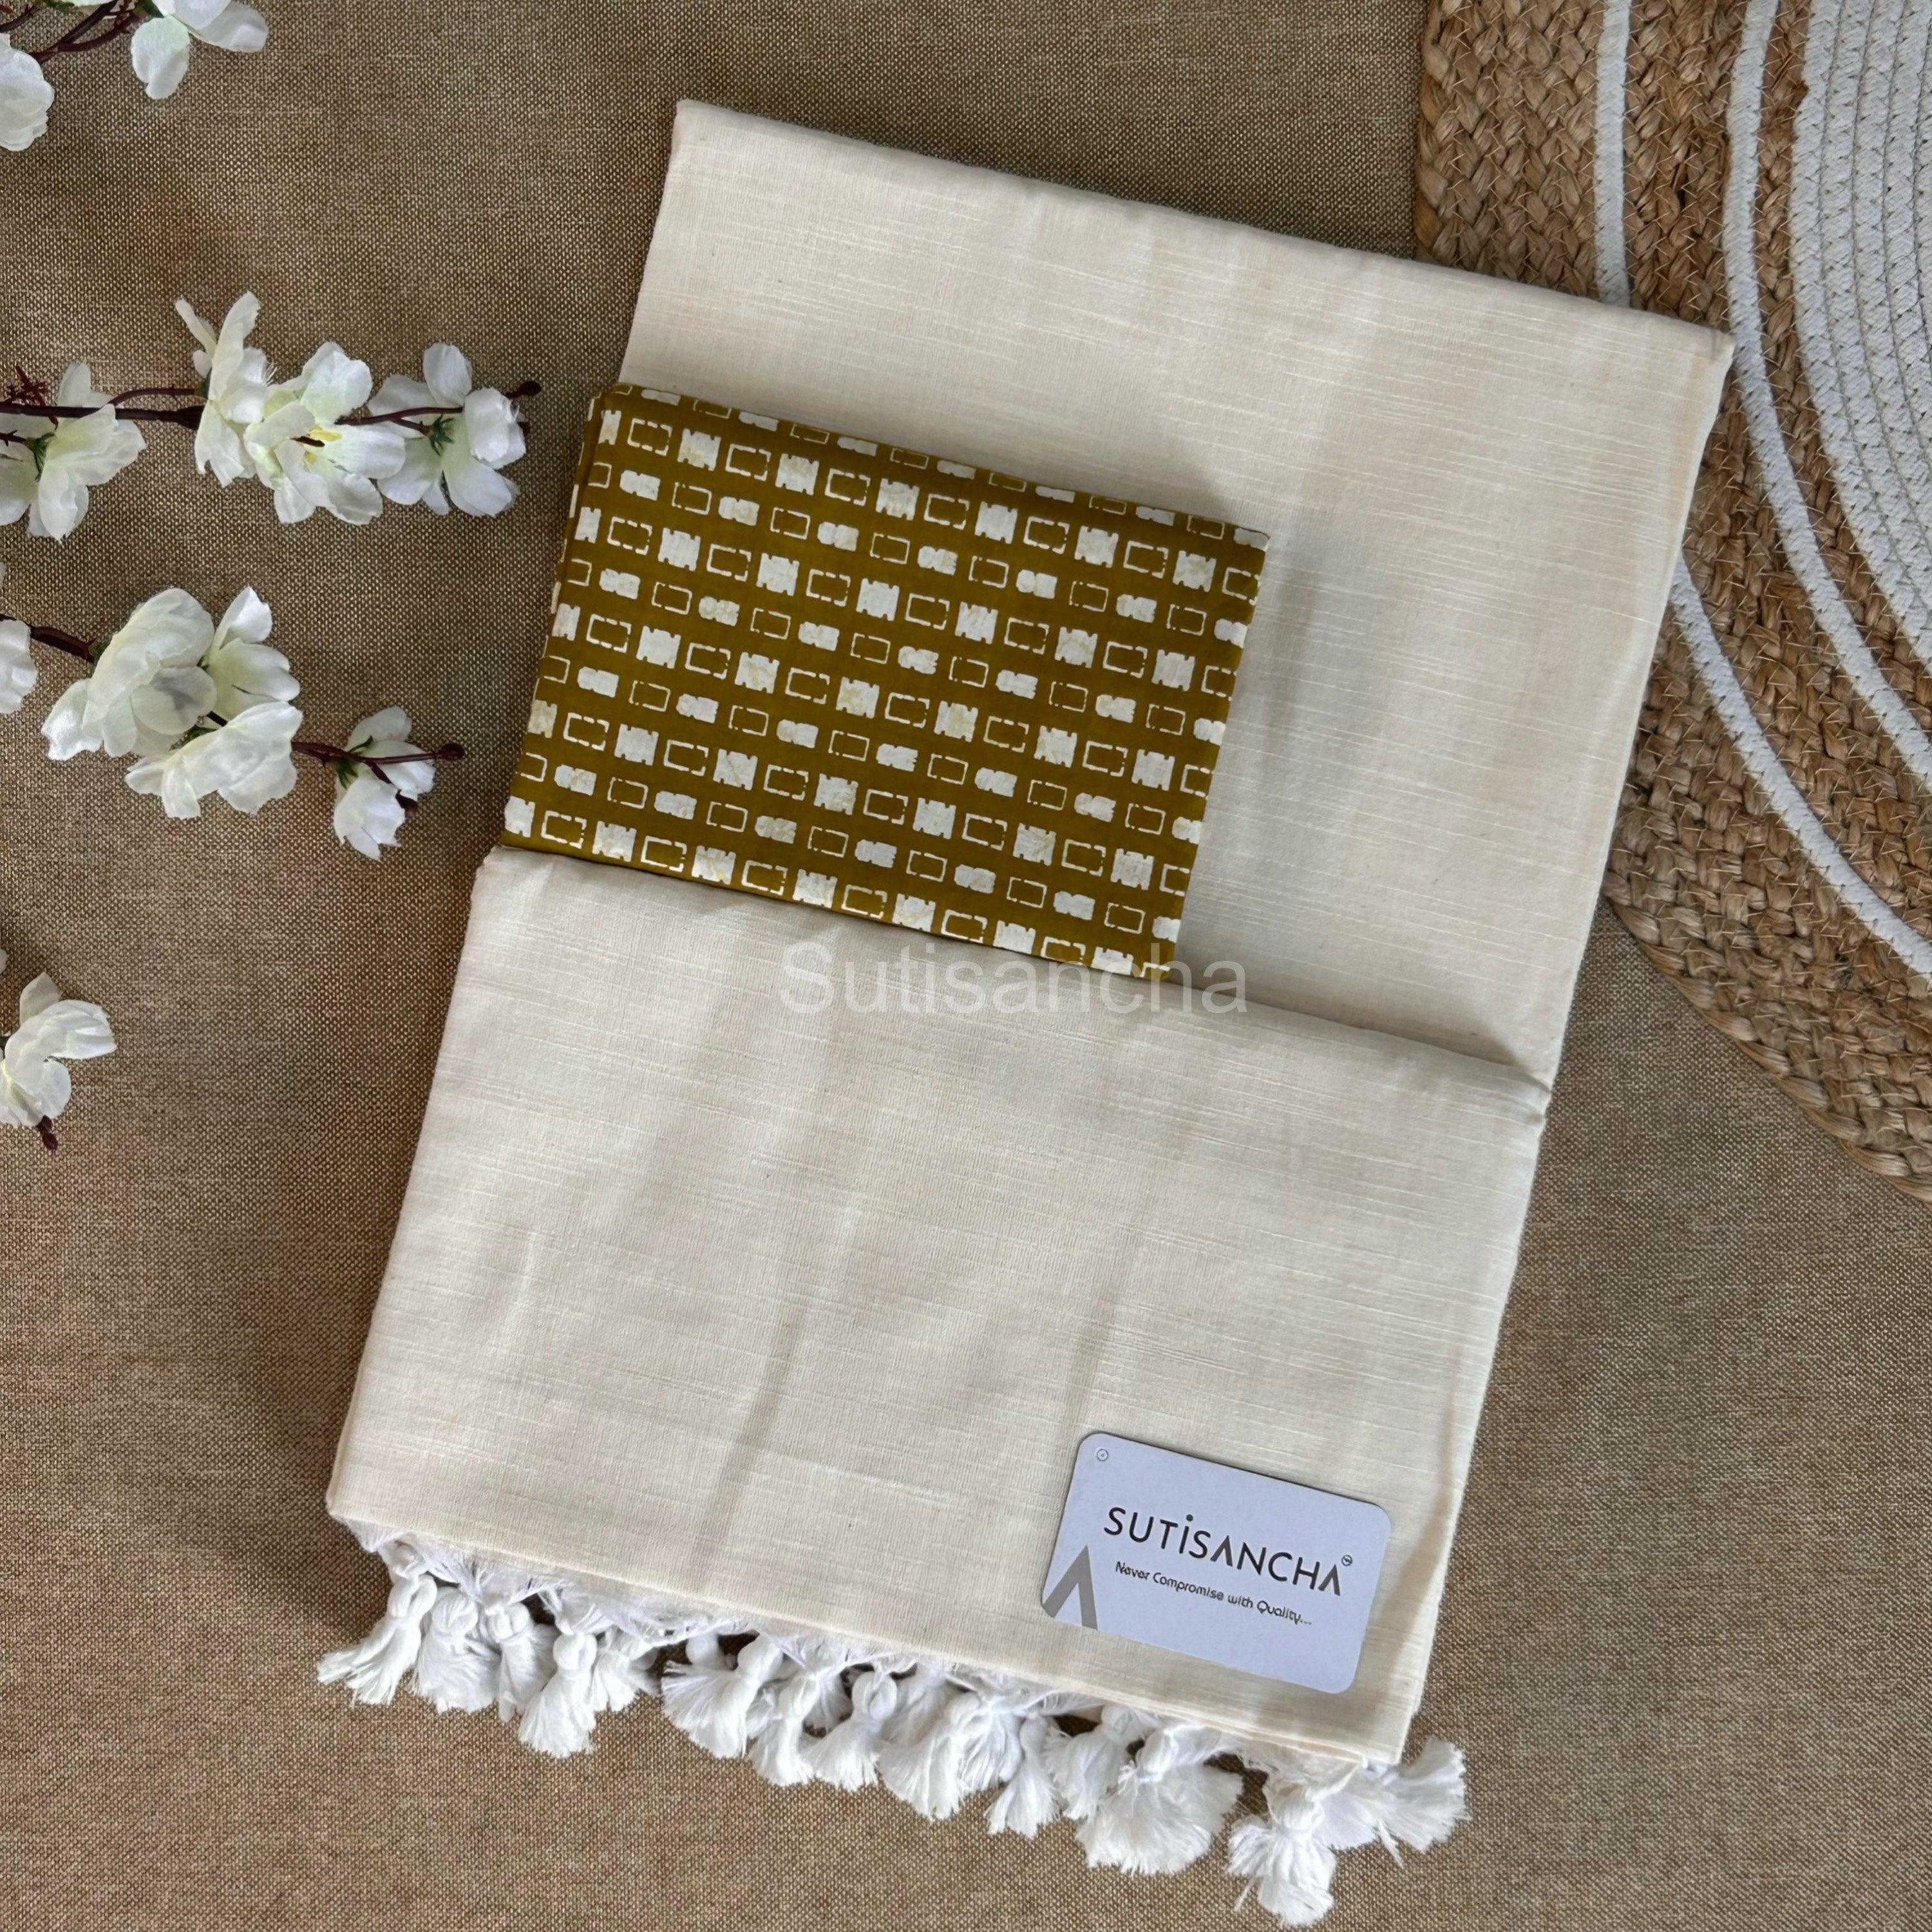 Sutisancha Offwhite Khadi Saree & Cotton Design Blouse - Suti Sancha